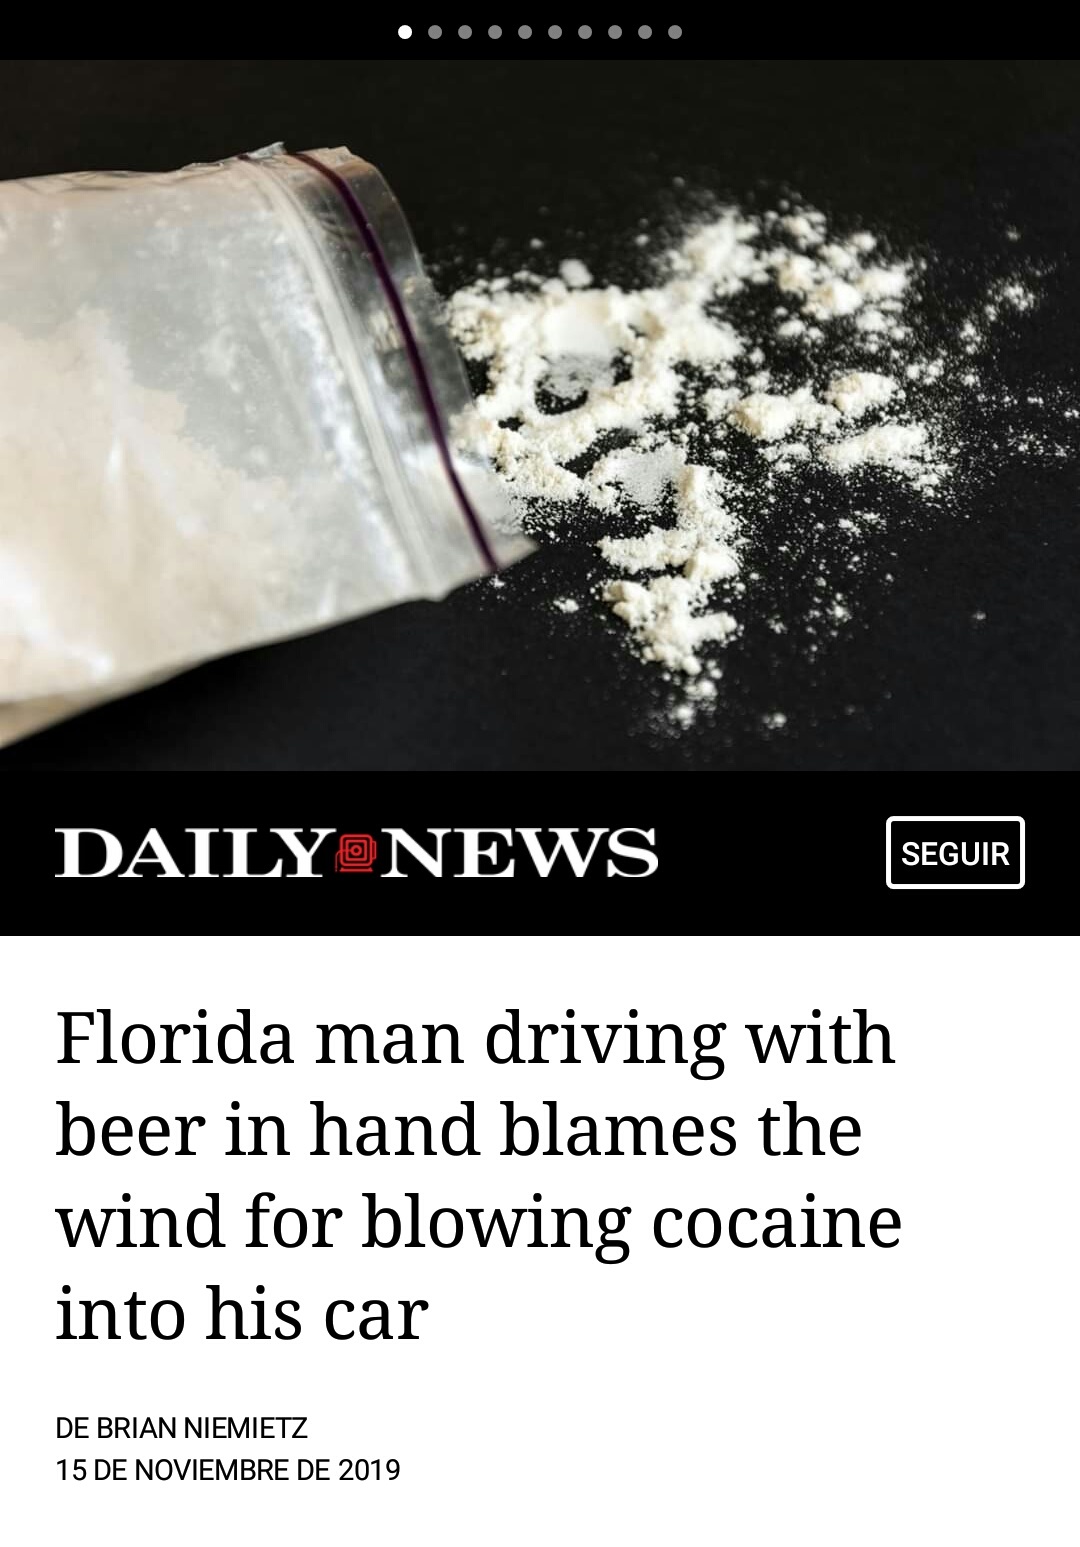 cocaine drug - Daily News Seguir Florida man driving with beer in hand blames the wind for blowing cocaine into his car De Brian Niemietz 15 De Noviembre De 2019